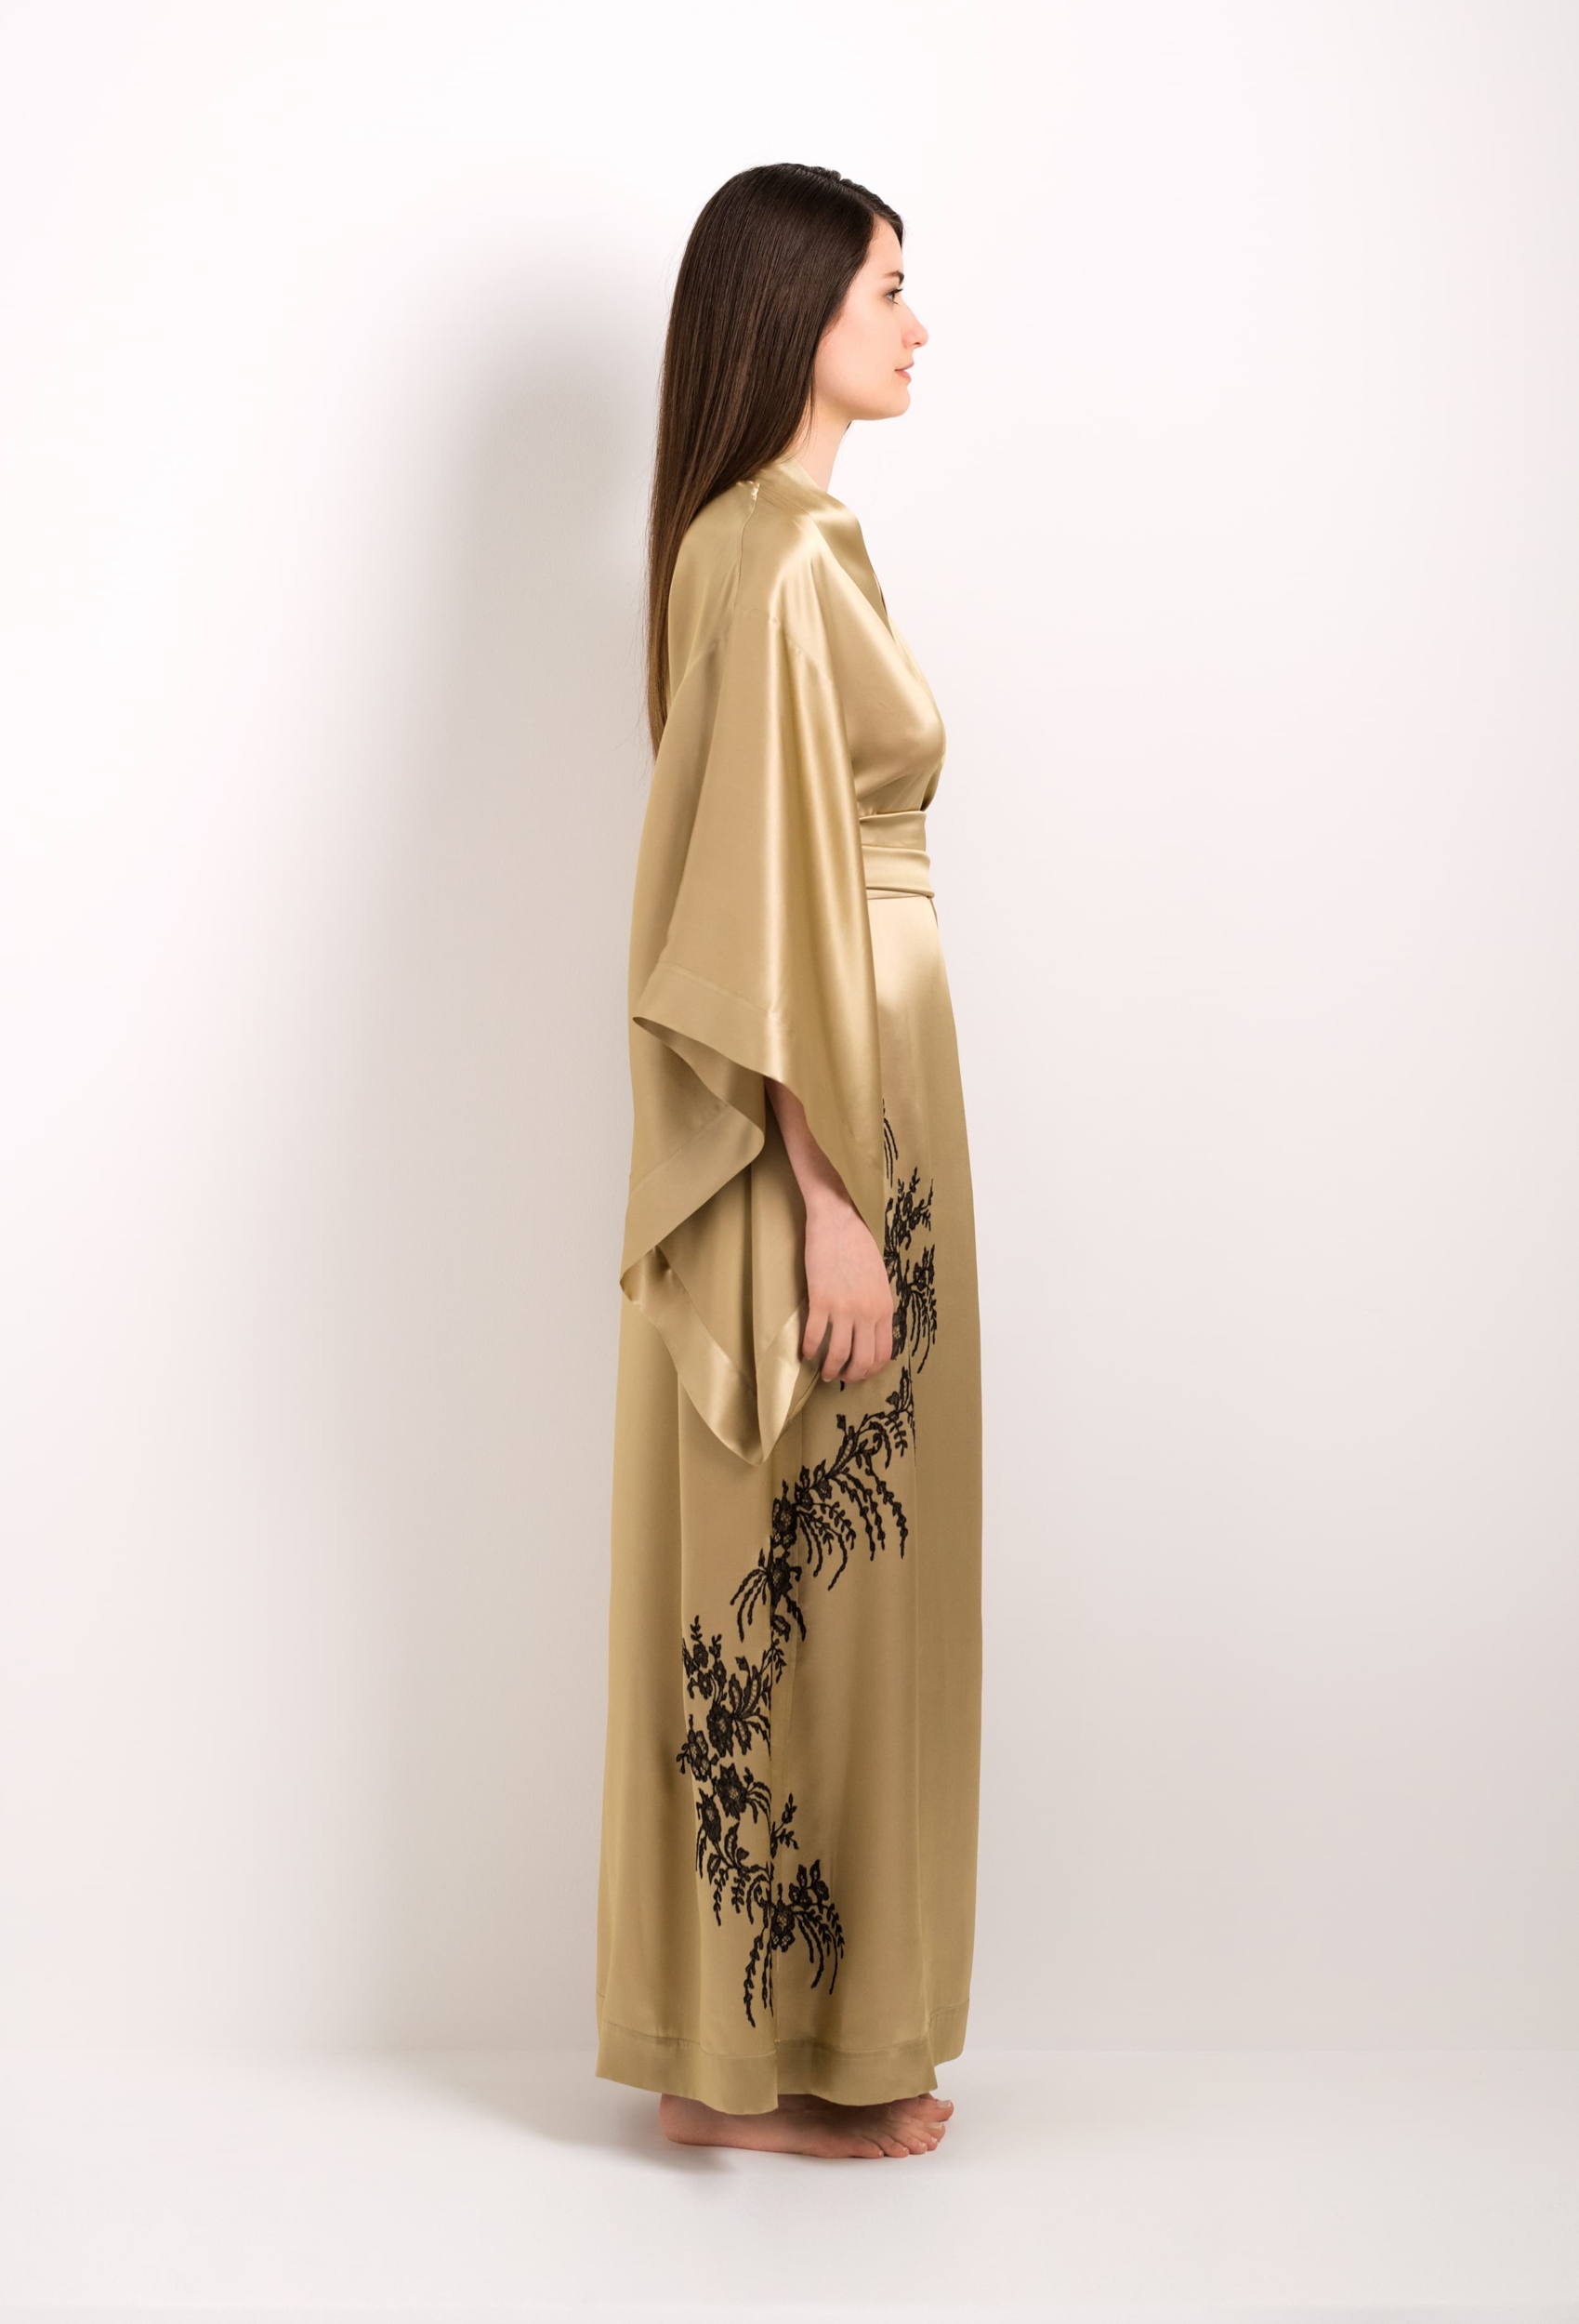 Long silk kimono - gold and black Venise Caudry lace - Carine Gilson